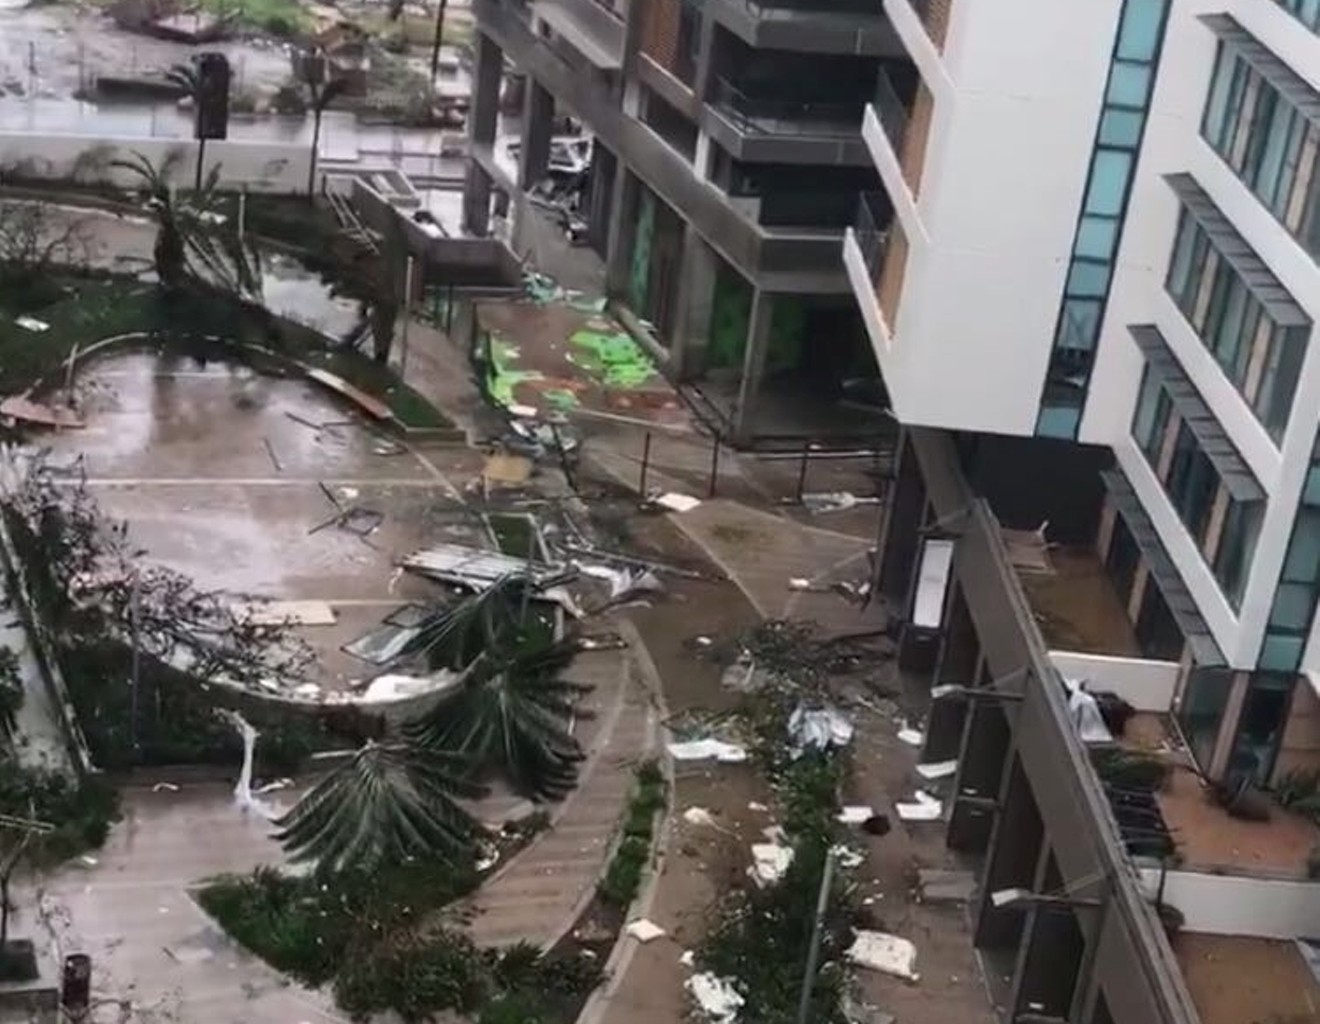 A scene of destruction in Puerto Rico.